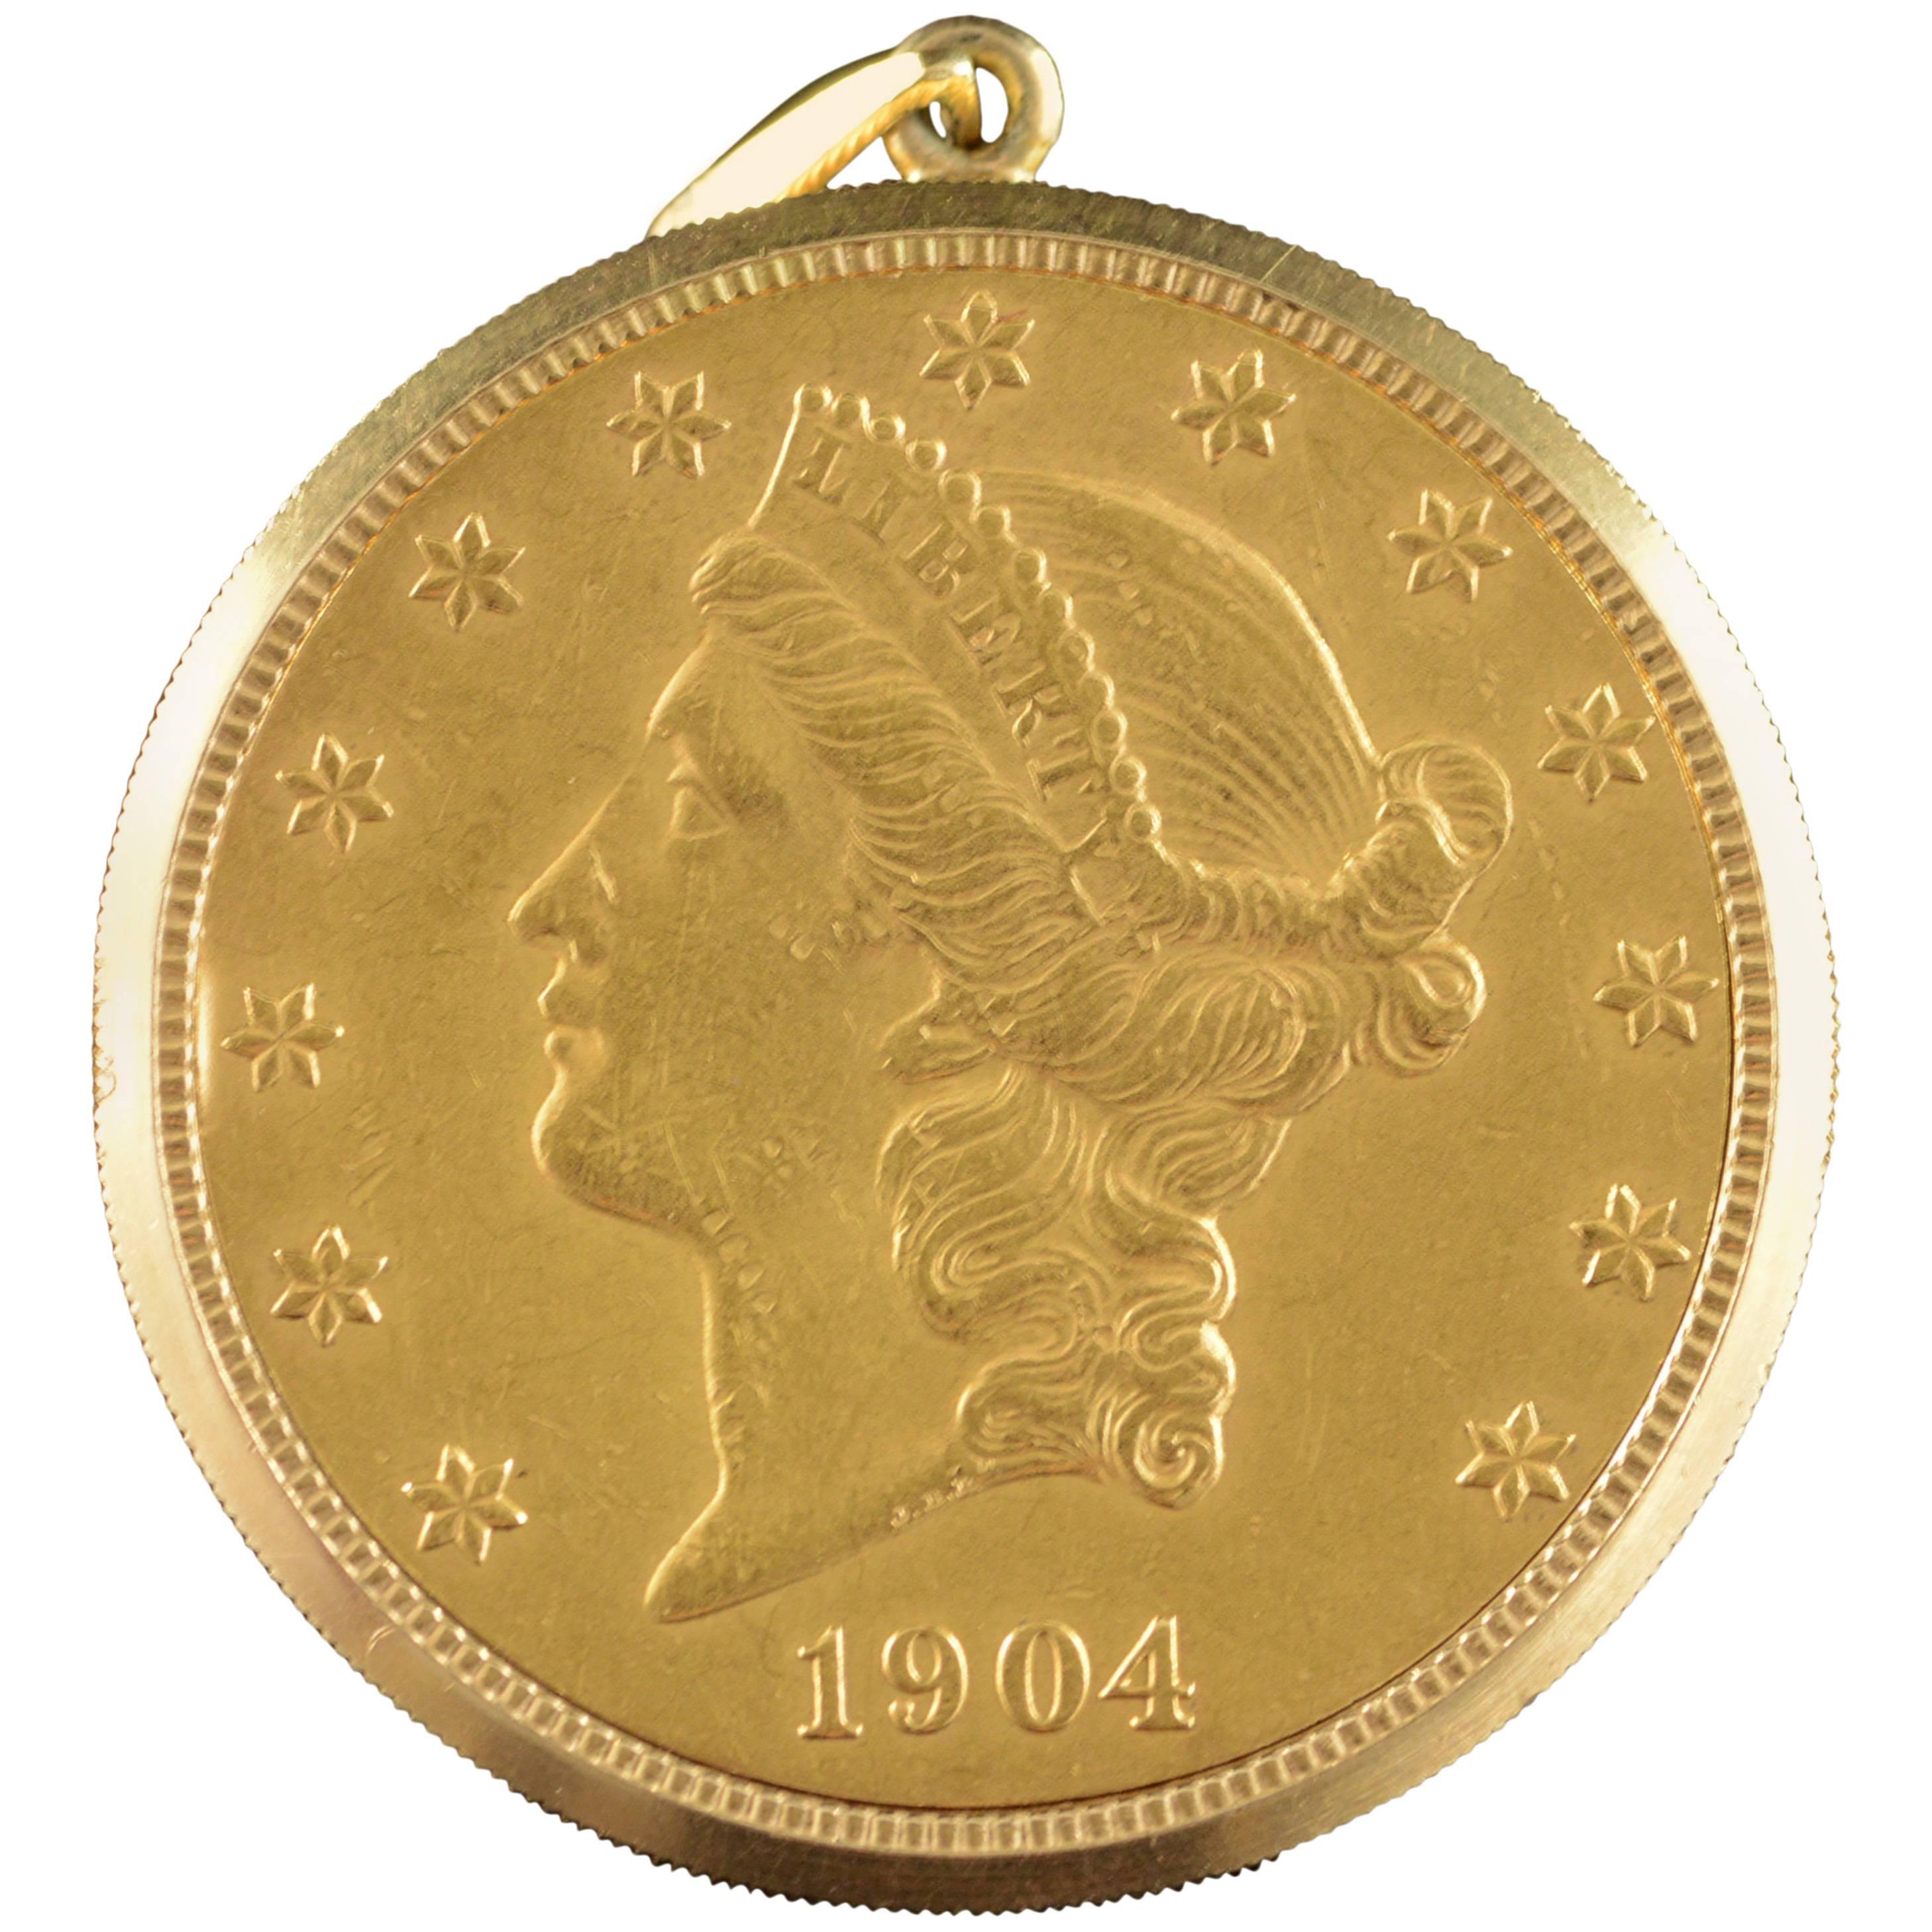  Eska $20 US Gold Liberty Hidden Pocket Watch